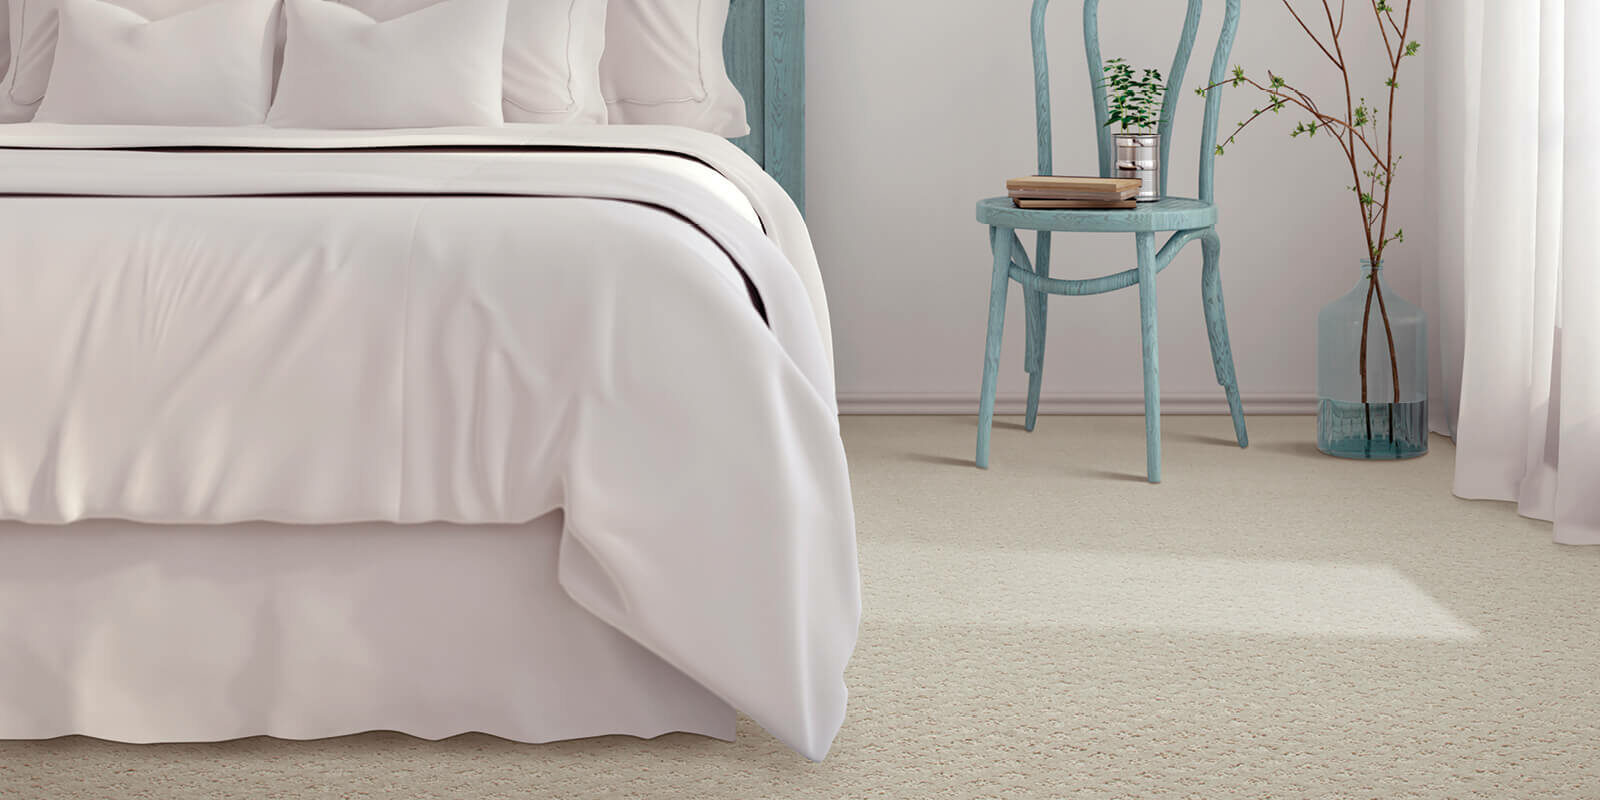 Carpet in bedroom | Flemington Department Store